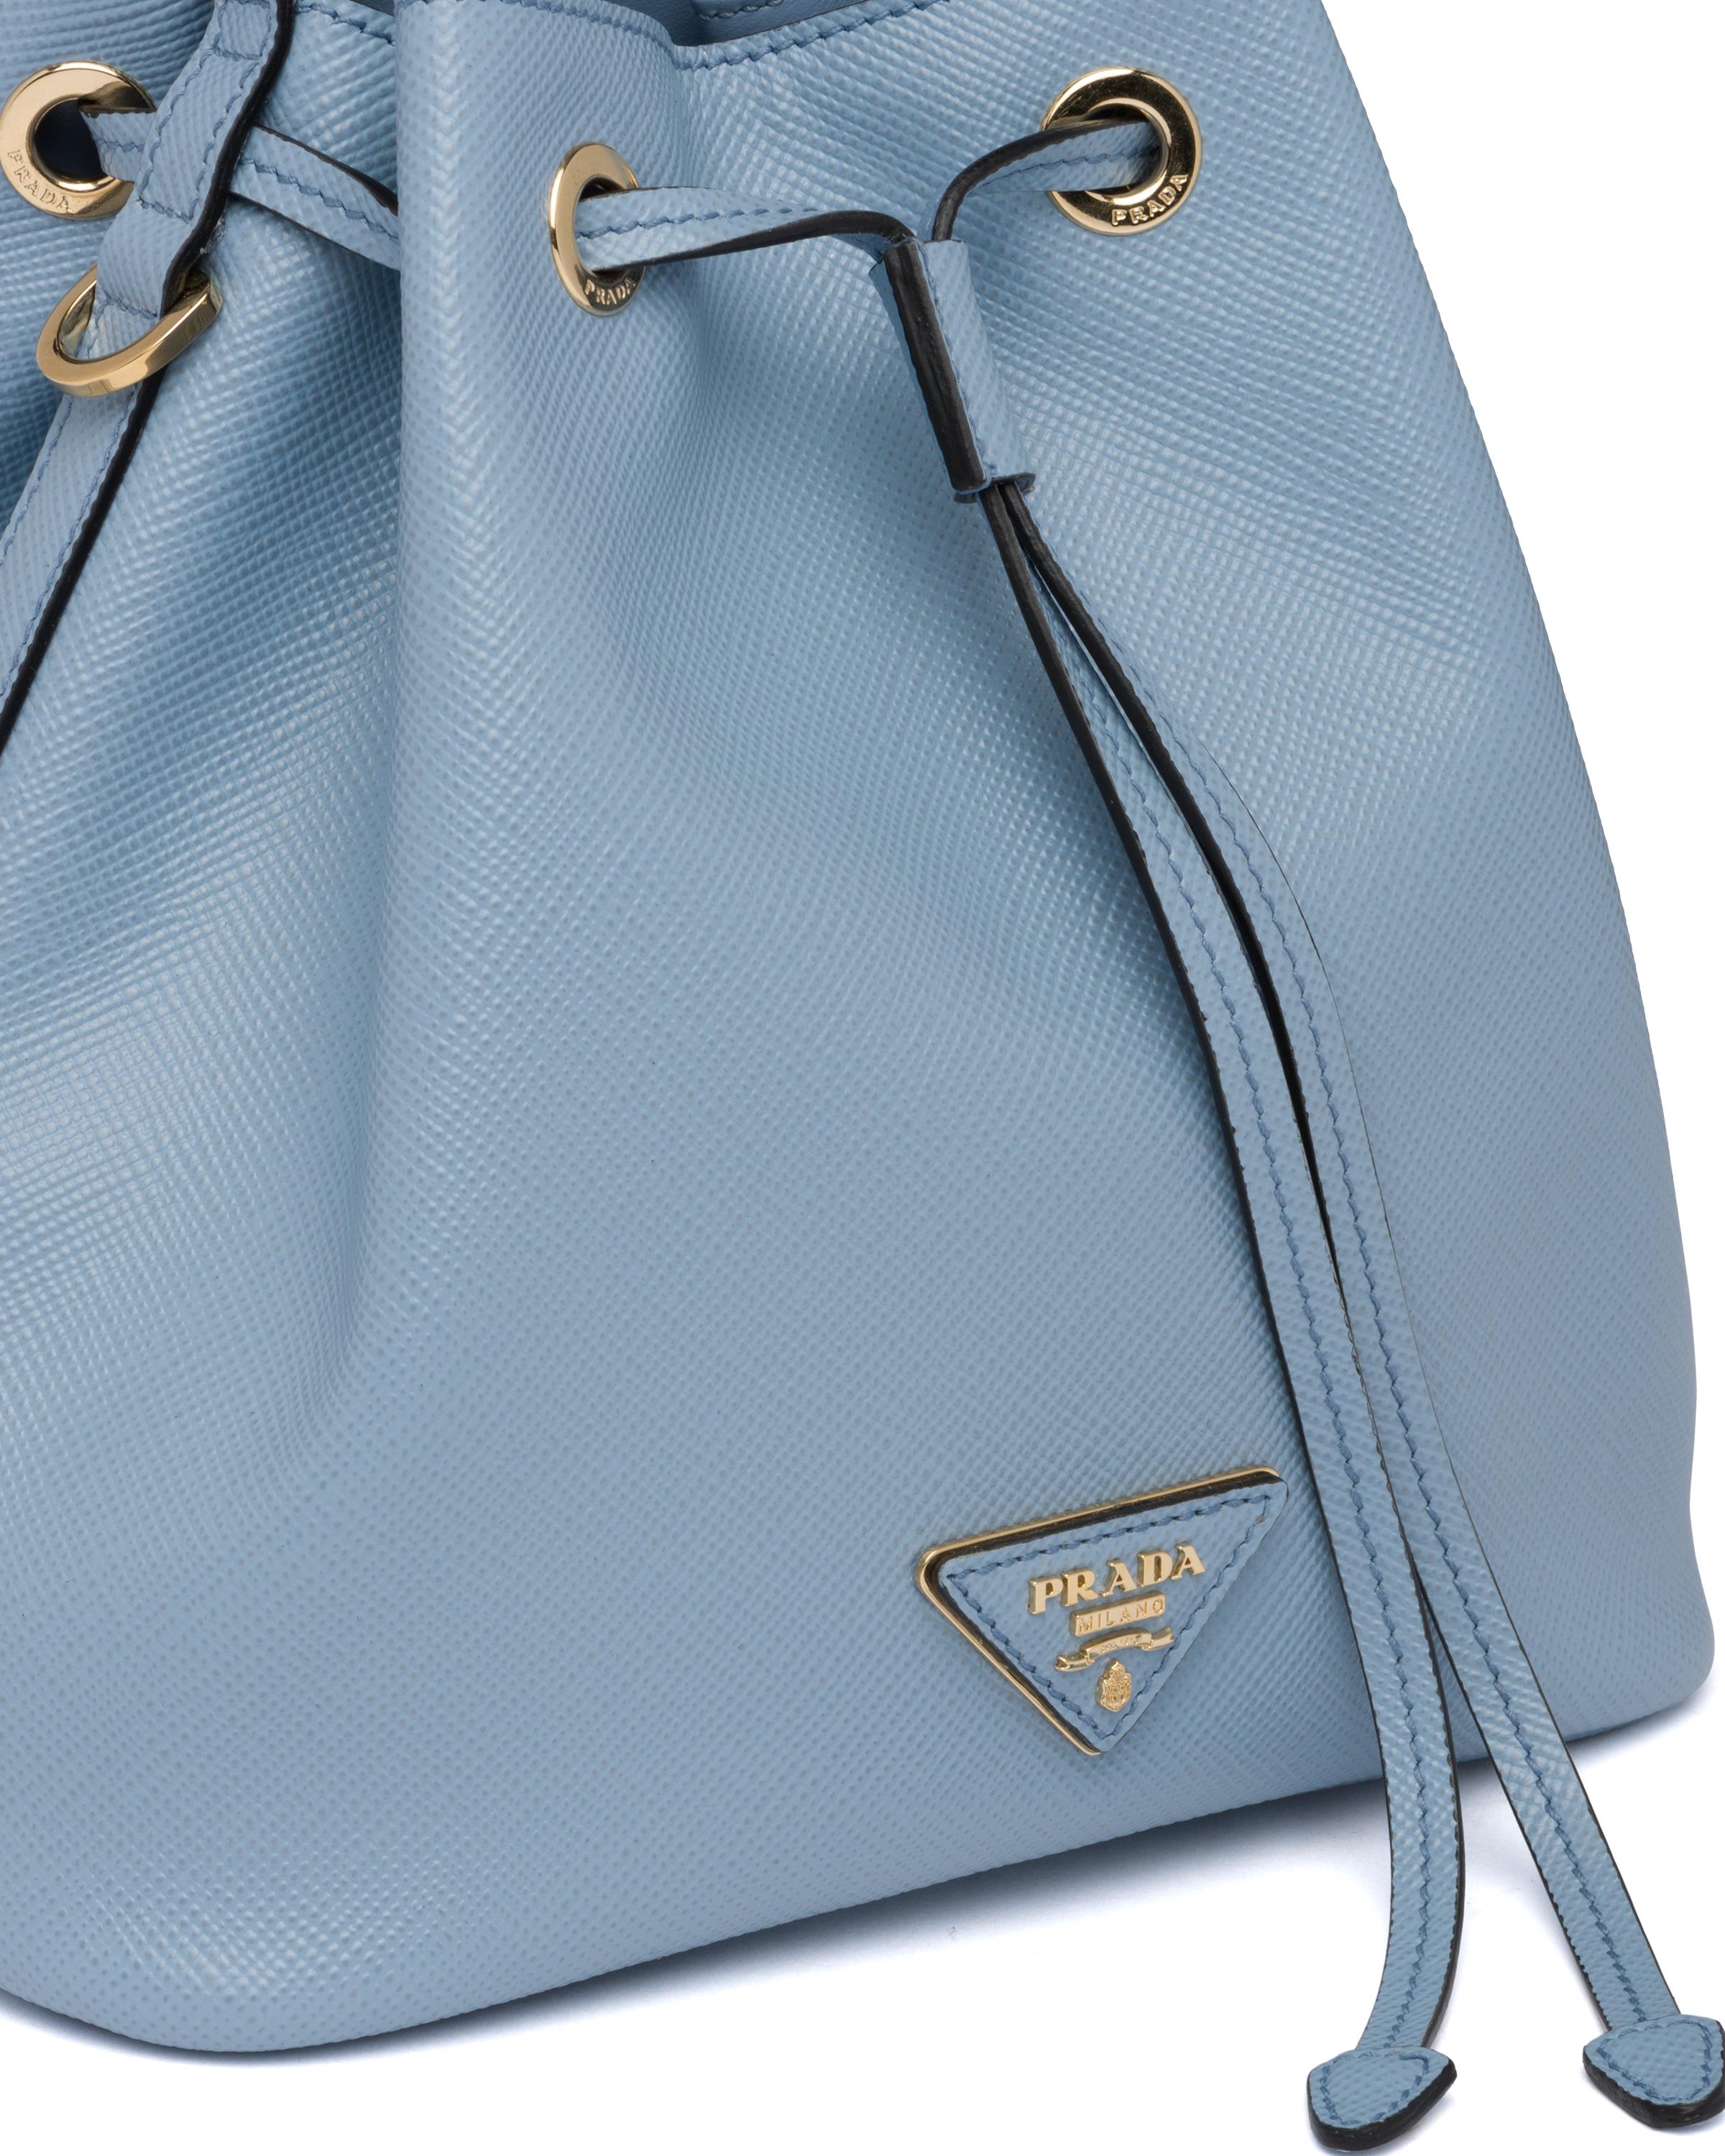 Prada Saffiano Leather Bucket Bag in Blue - Save 8% | Lyst